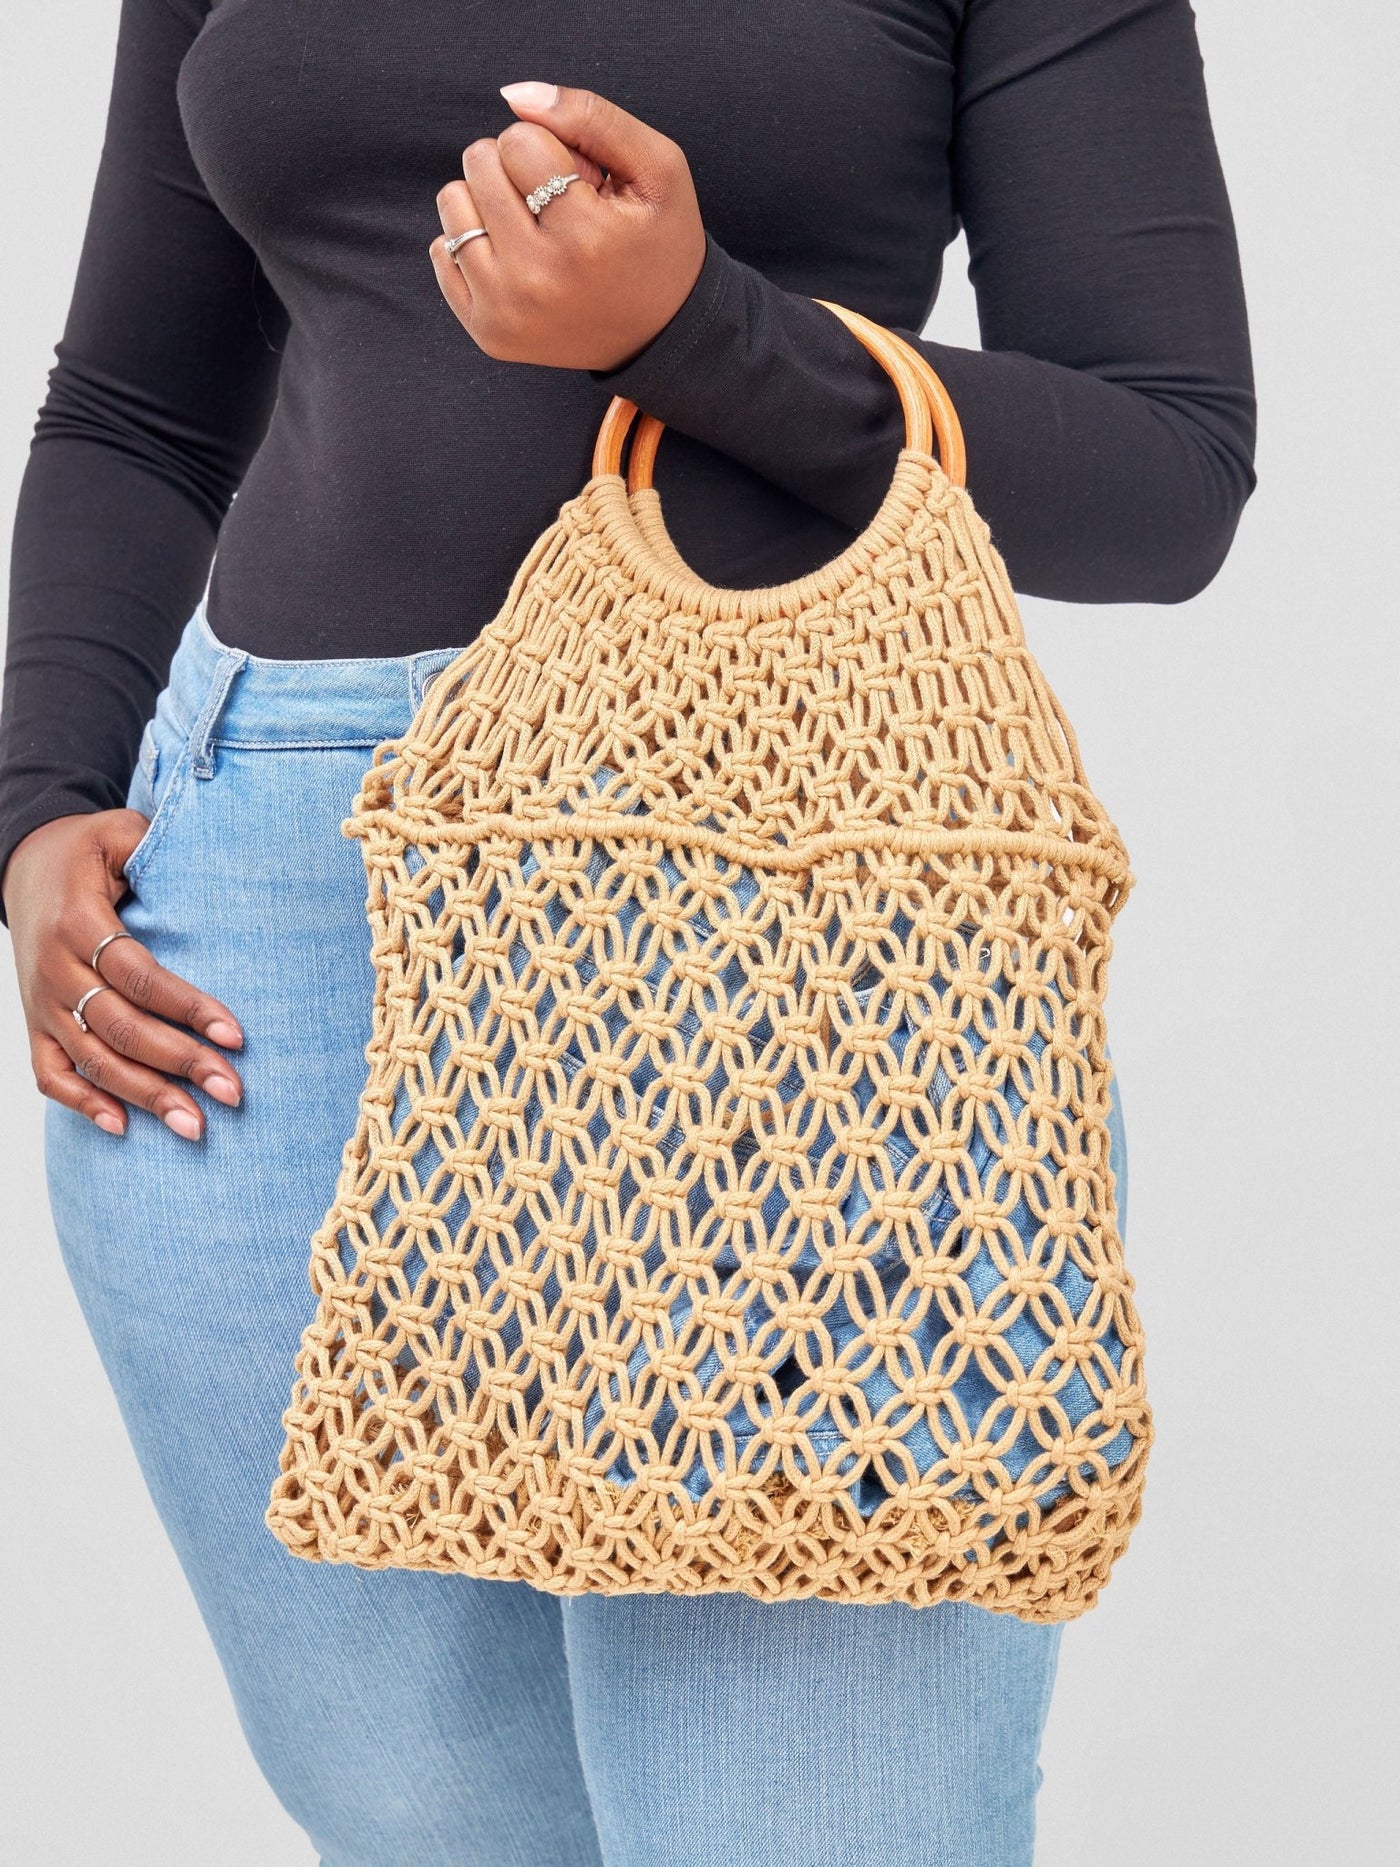 Sayuri Knitted Basket Boho Tote - Brown - Shopzetu